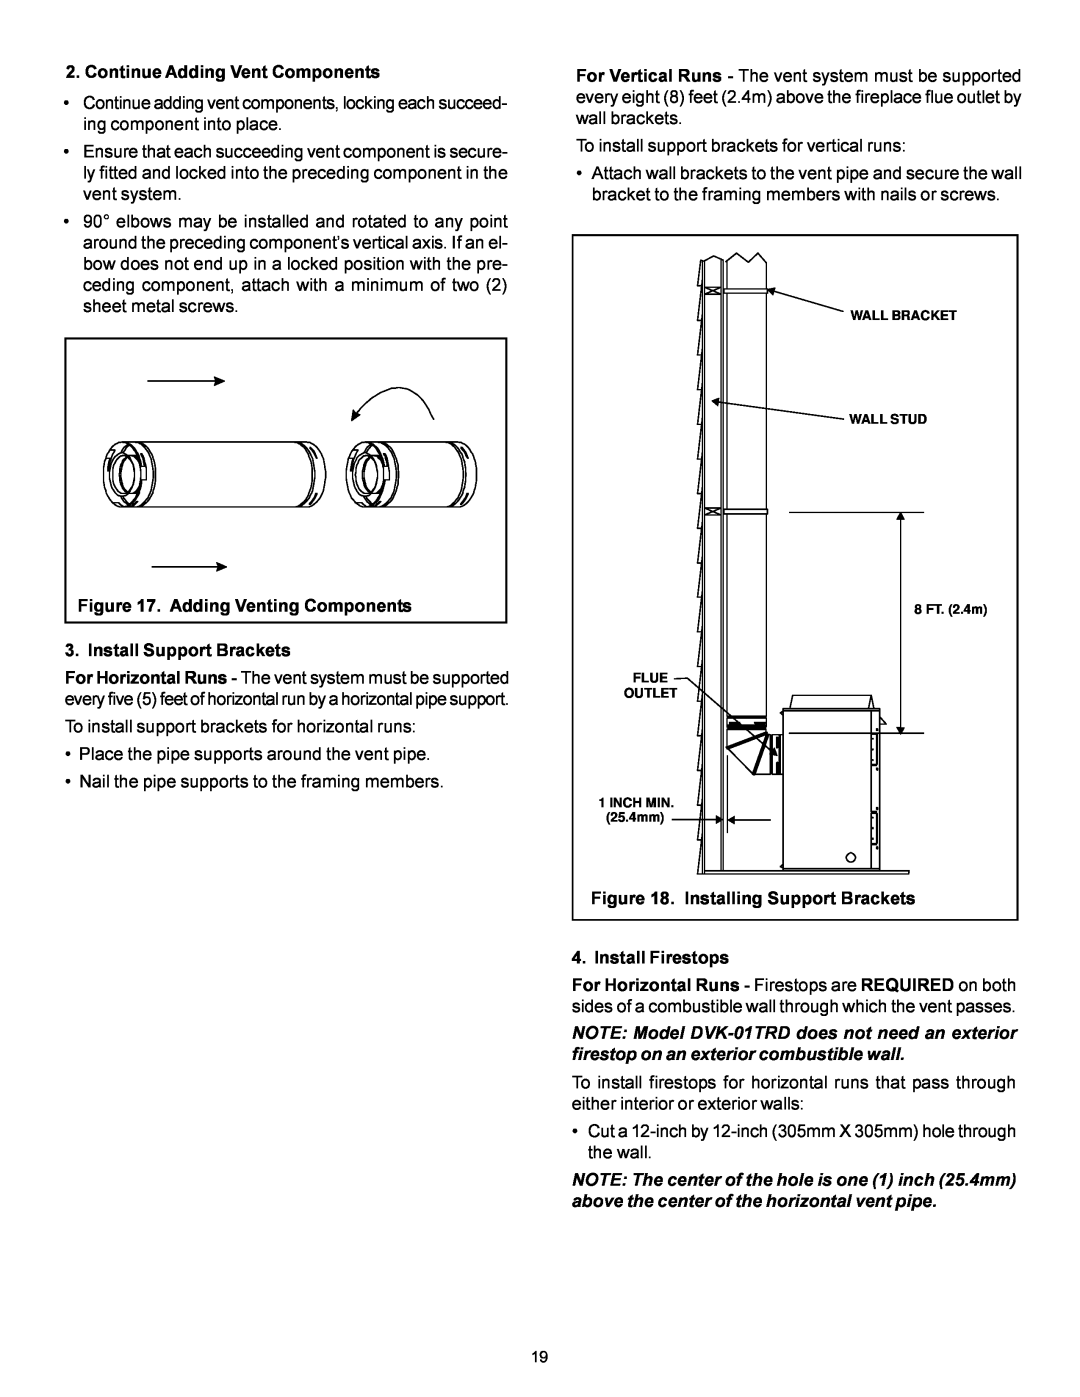 Heat & Glo LifeStyle BE-41 manual Continue Adding Vent Components, Adding Venting Components, Install Support Brackets 